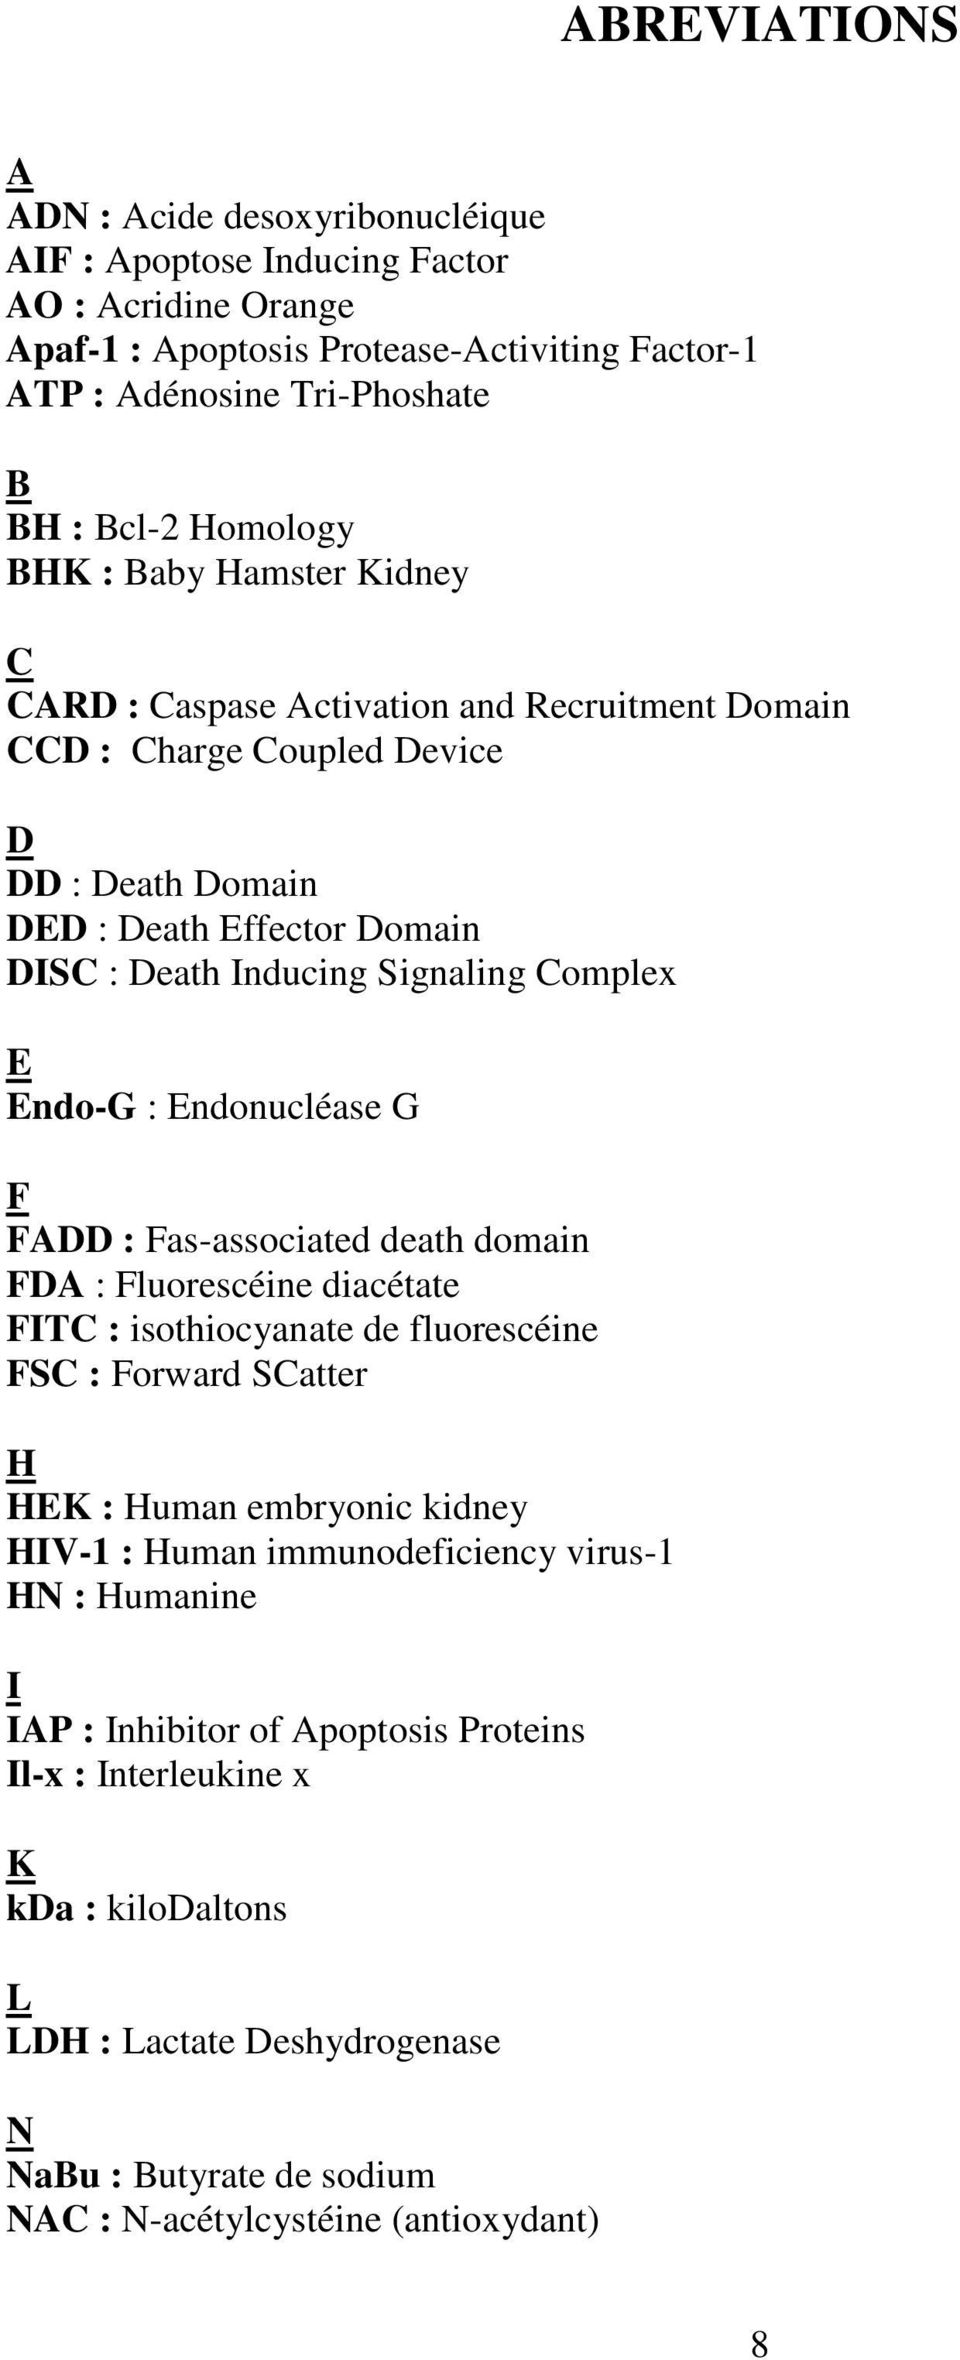 Endo-G : Endonucléase G F FADD : Fas-associated death domain FDA : Fluorescéine diacétate FITC : isothiocyanate de fluorescéine FSC : Forward SCatter H HEK : Human embryonic kidney HIV-1 : Human